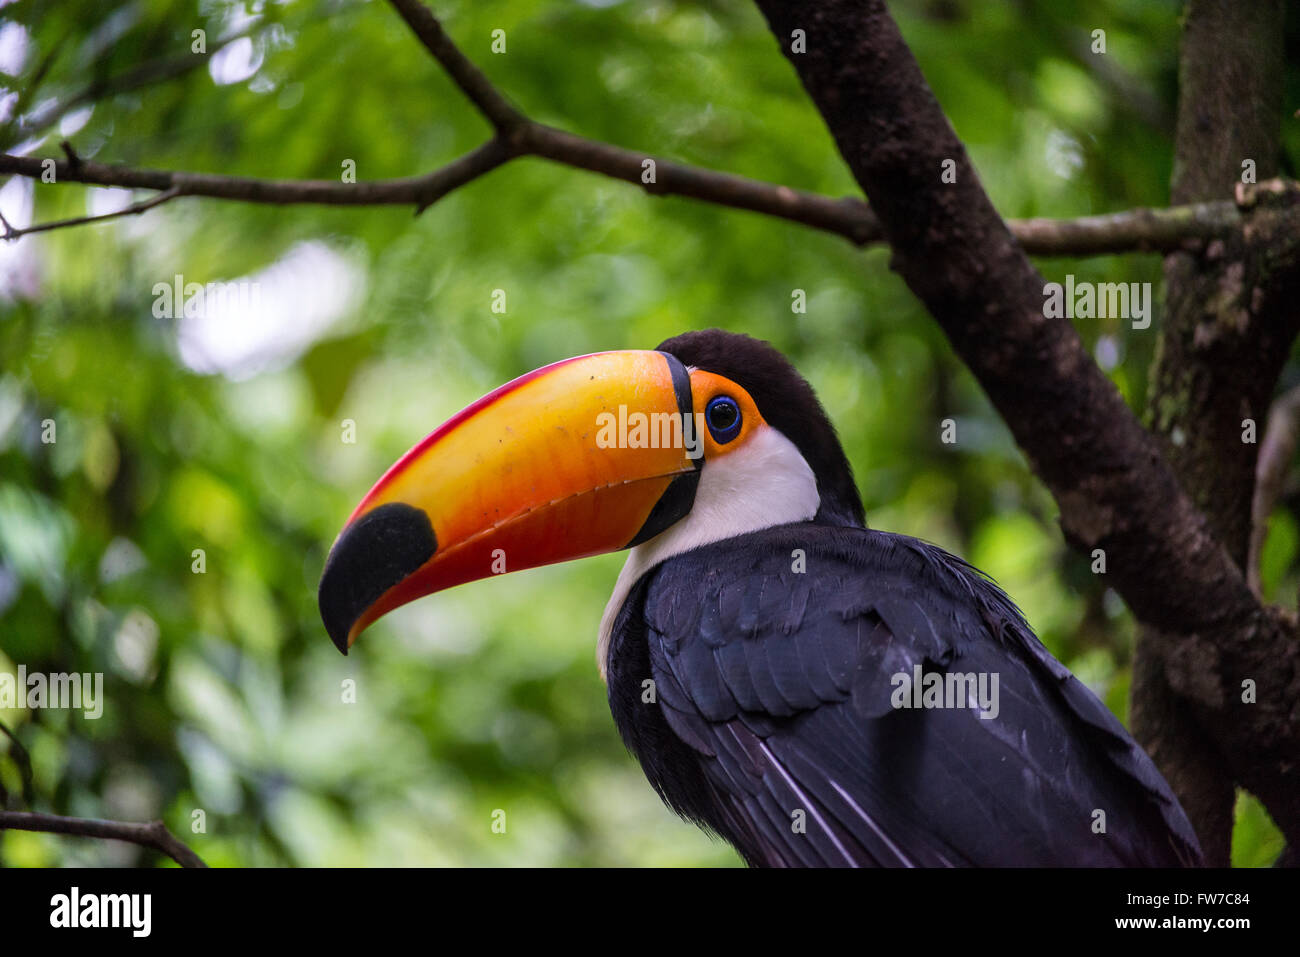 Toco toucan or common toucan, Bird Park, Foz do Iguacu, Brazil Stock Photo